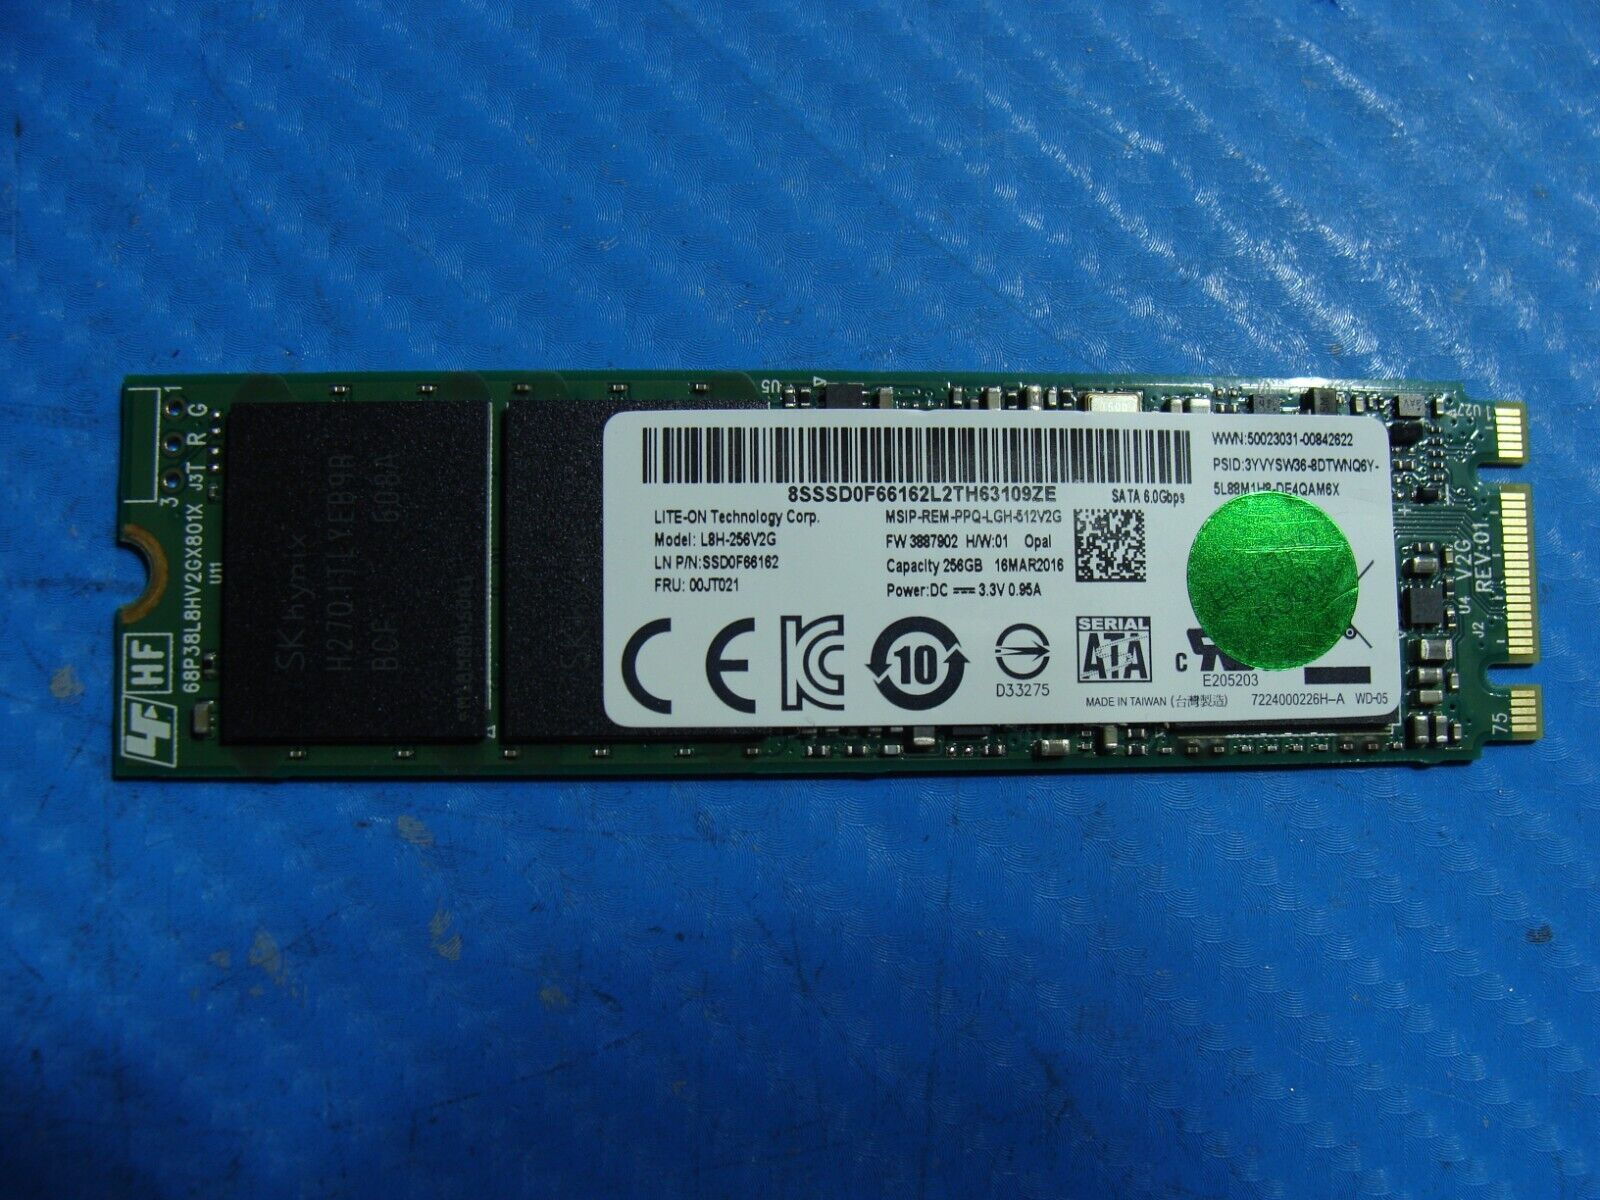 Lenovo ThinkPad X1 Carbon 4th Gen Lite-On 256GB SSD M.2 SATA L8H-256V2G 00JT021